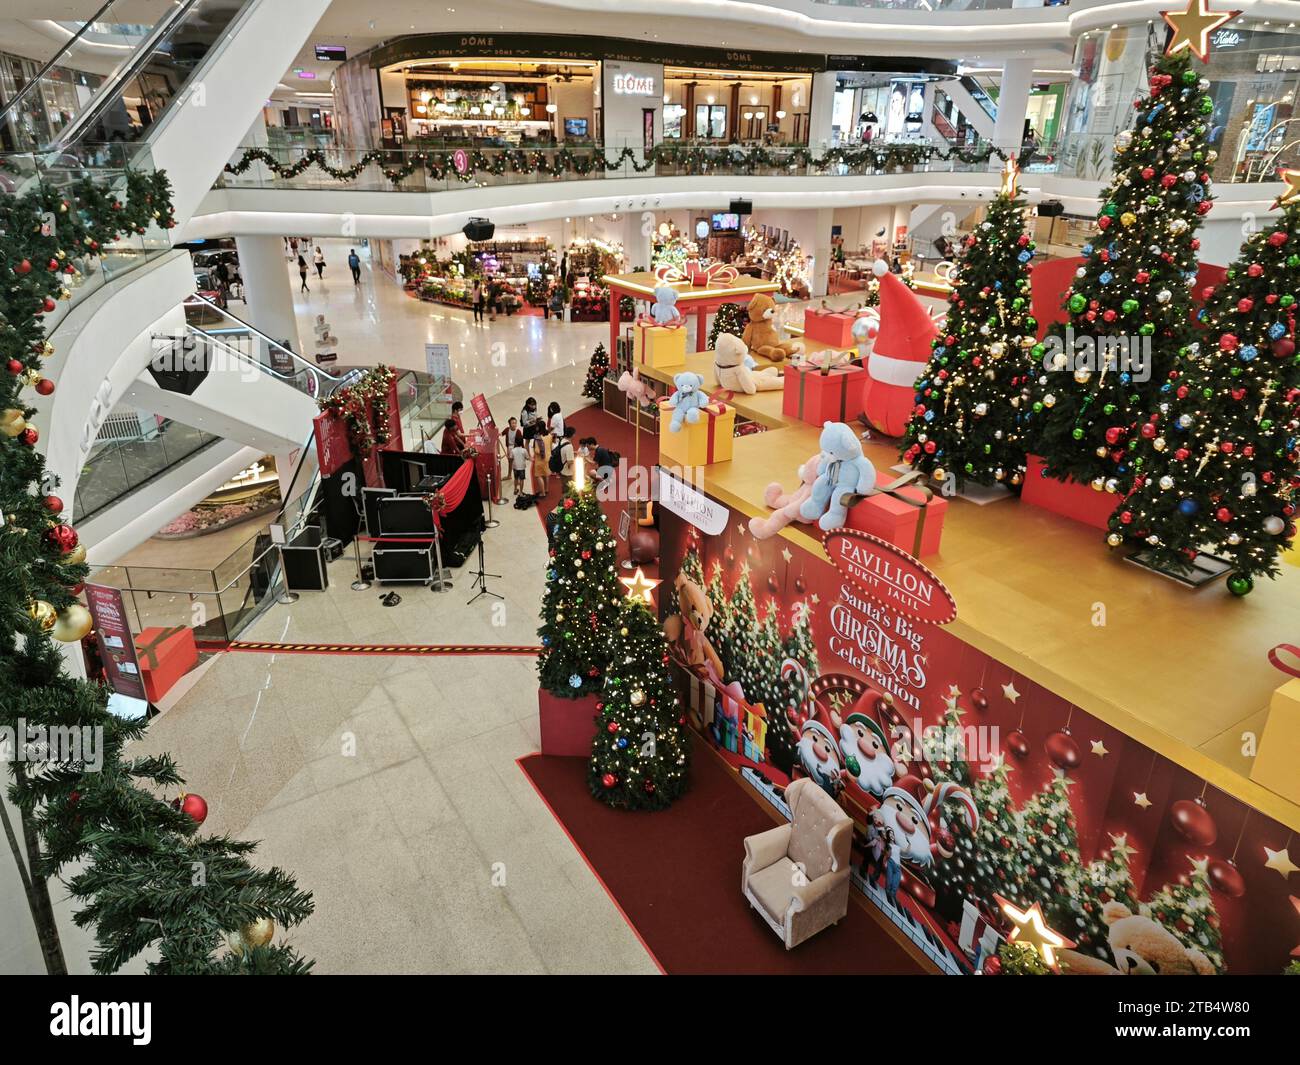 Beautiful decoration scene at the indoor entrance for the coming Christmas celebration at Pavilion Mall, Bukit Jalil, Kuala Lumpur,Malaysia. Stock Photo